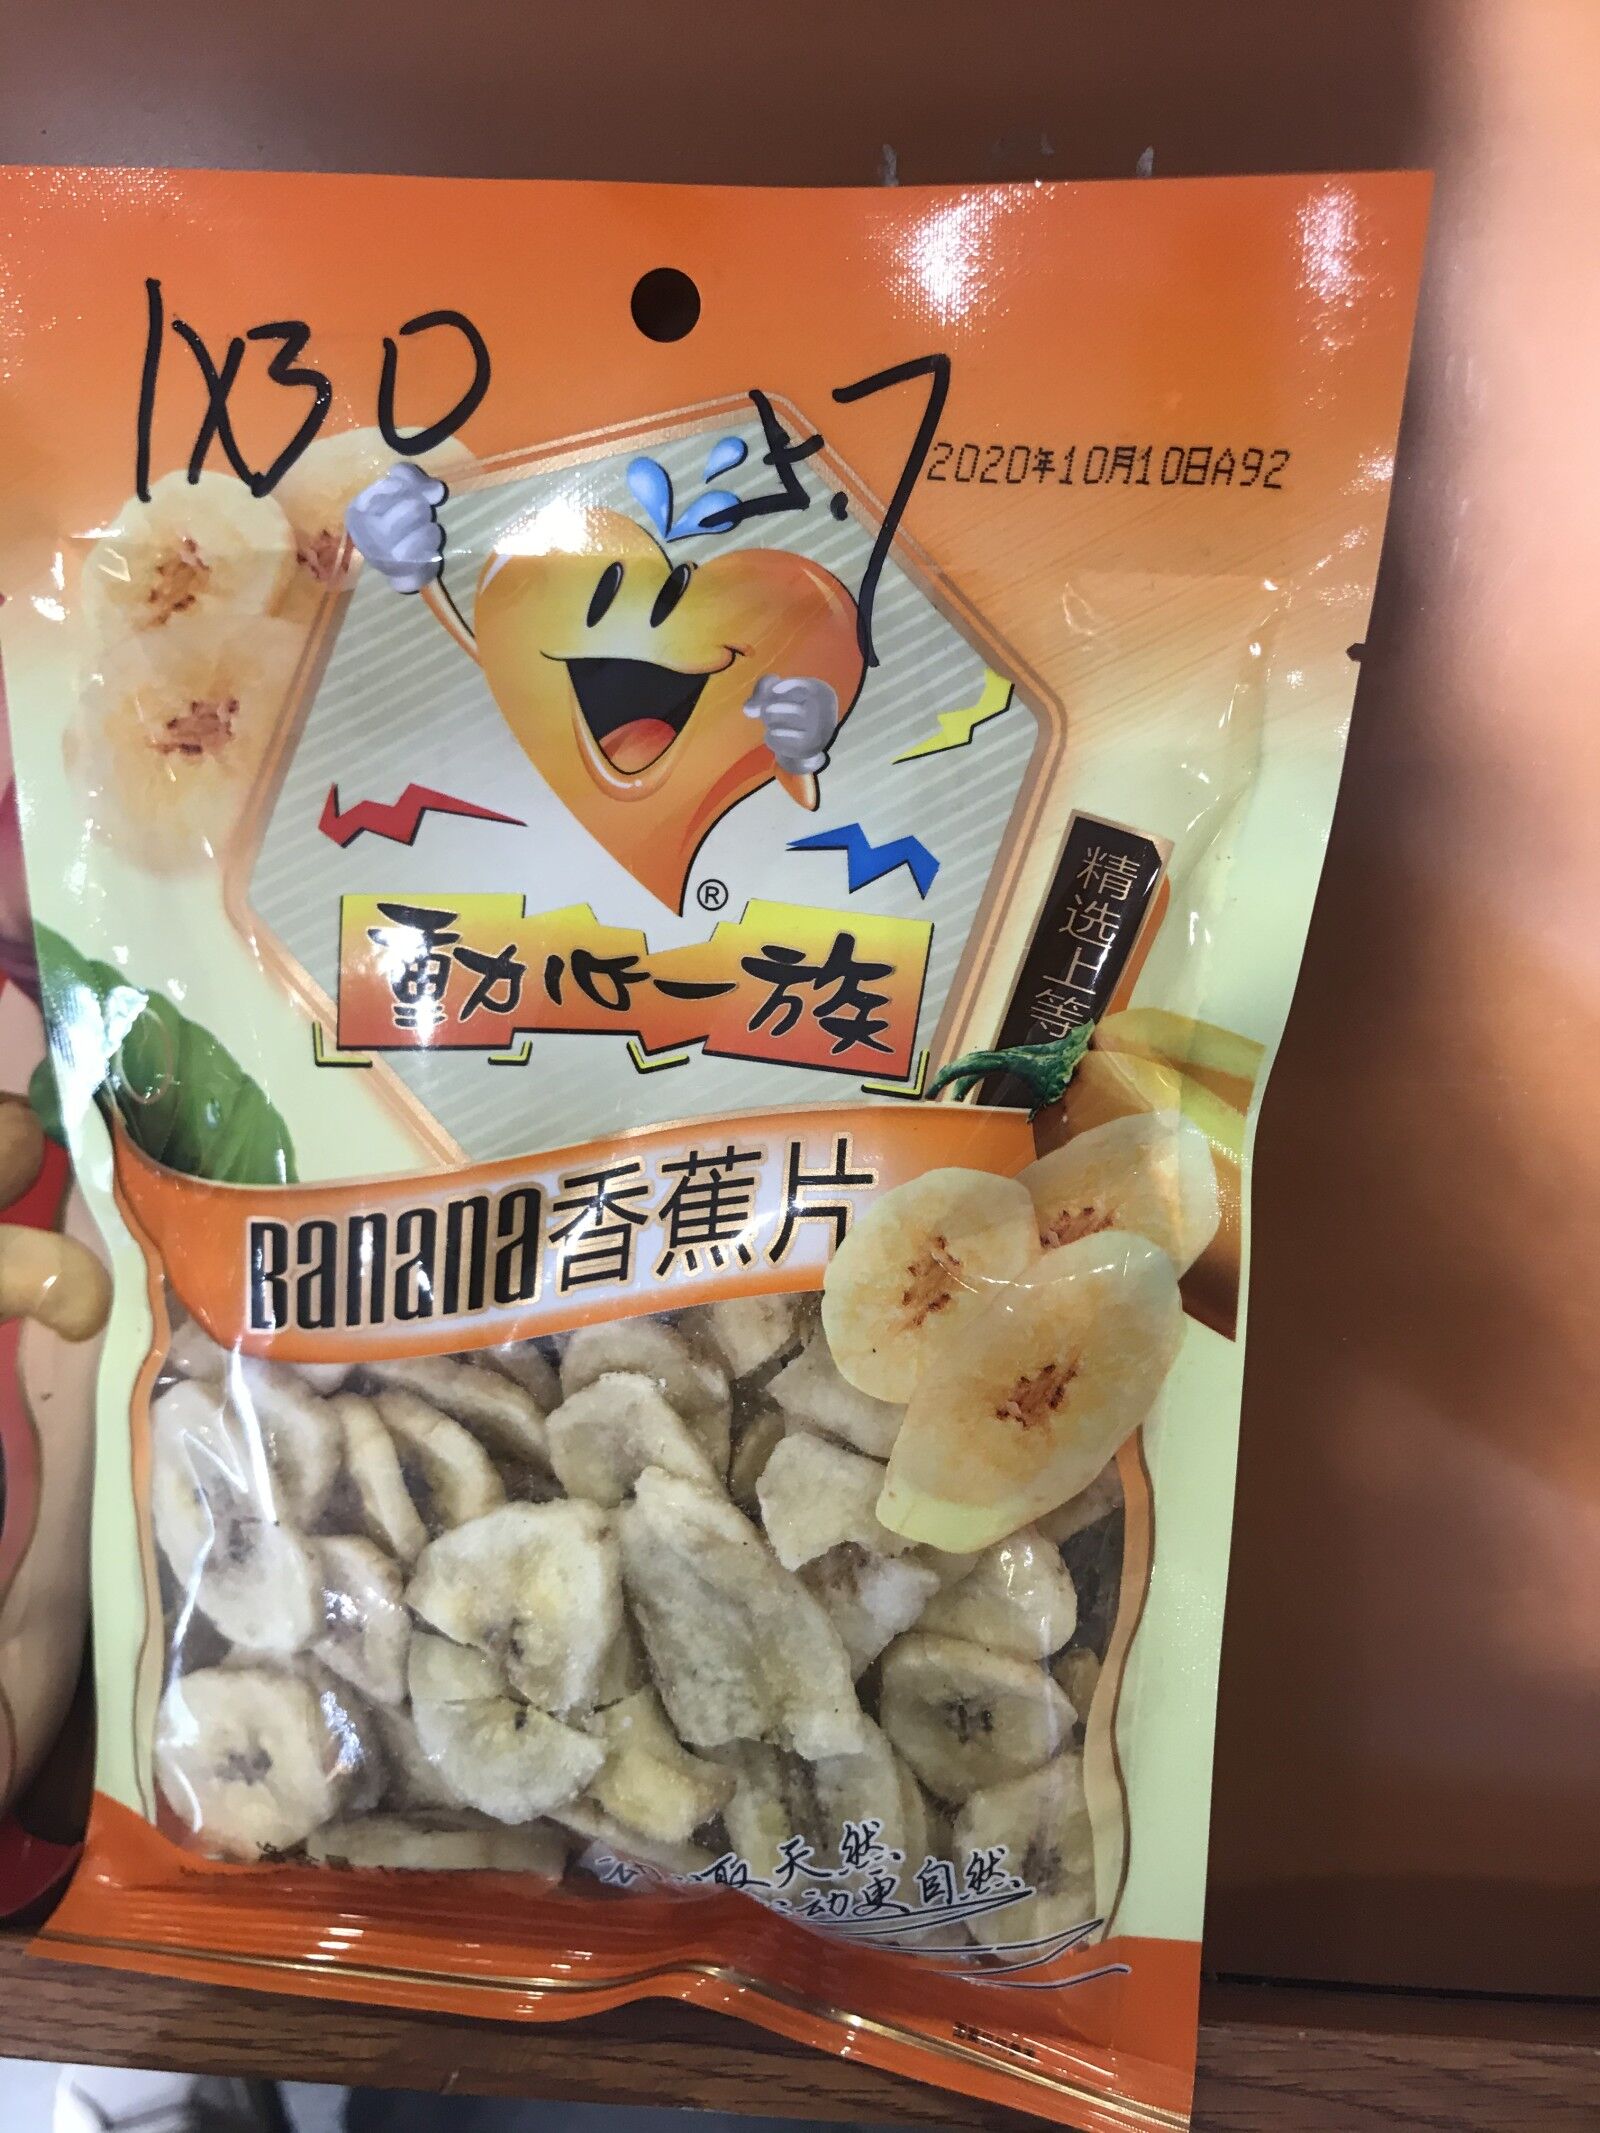 035 nuts: Banana